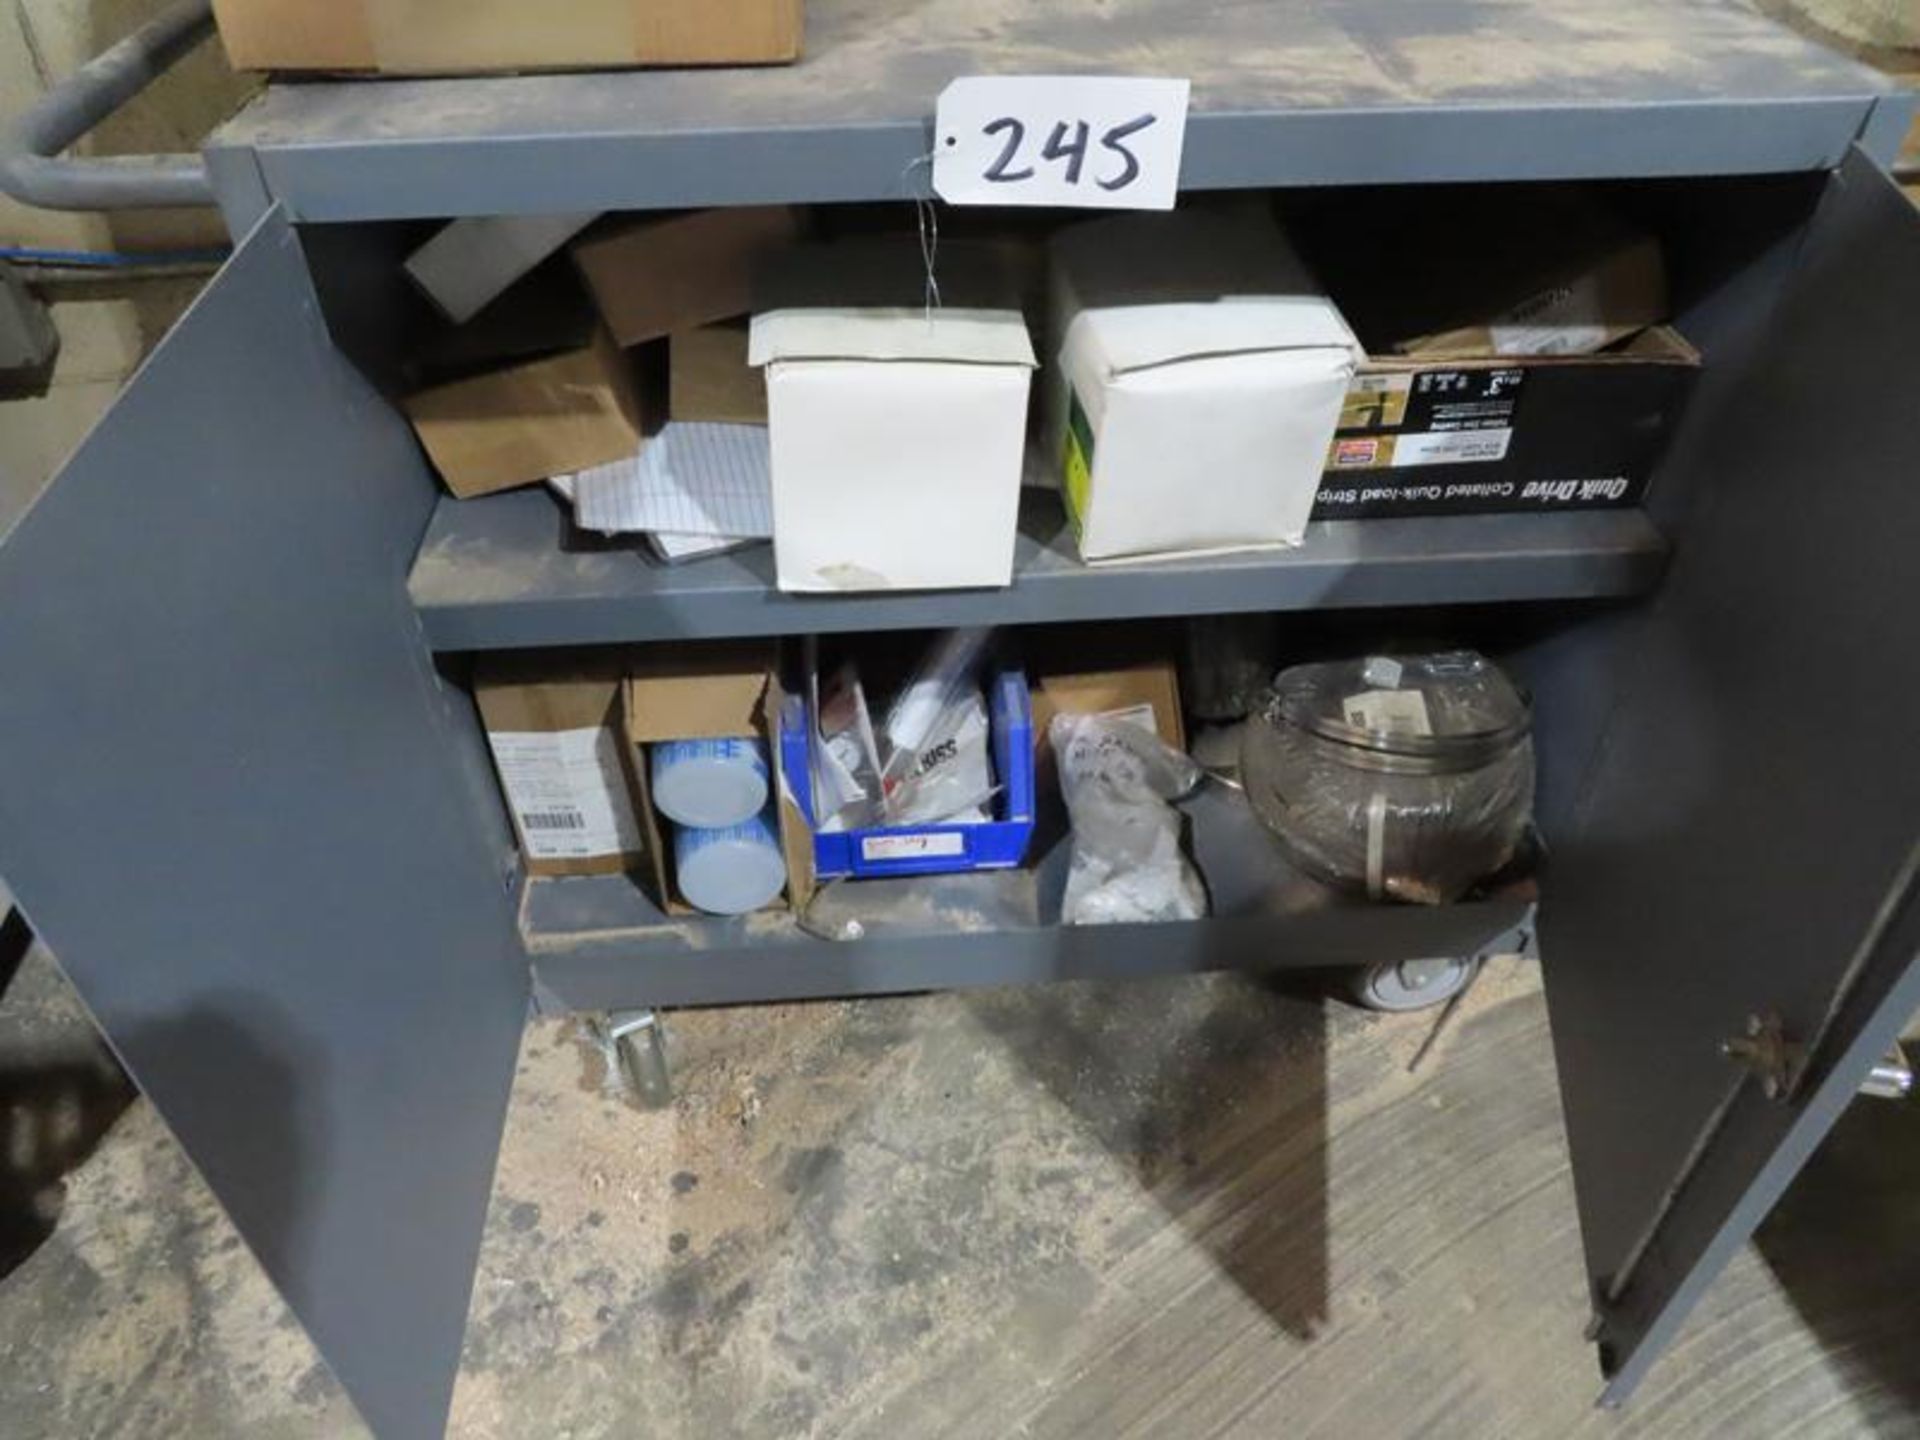 2-Door Heavy Duty Rolling Cabinet, W/ Paint Cups, Filters, Etc.